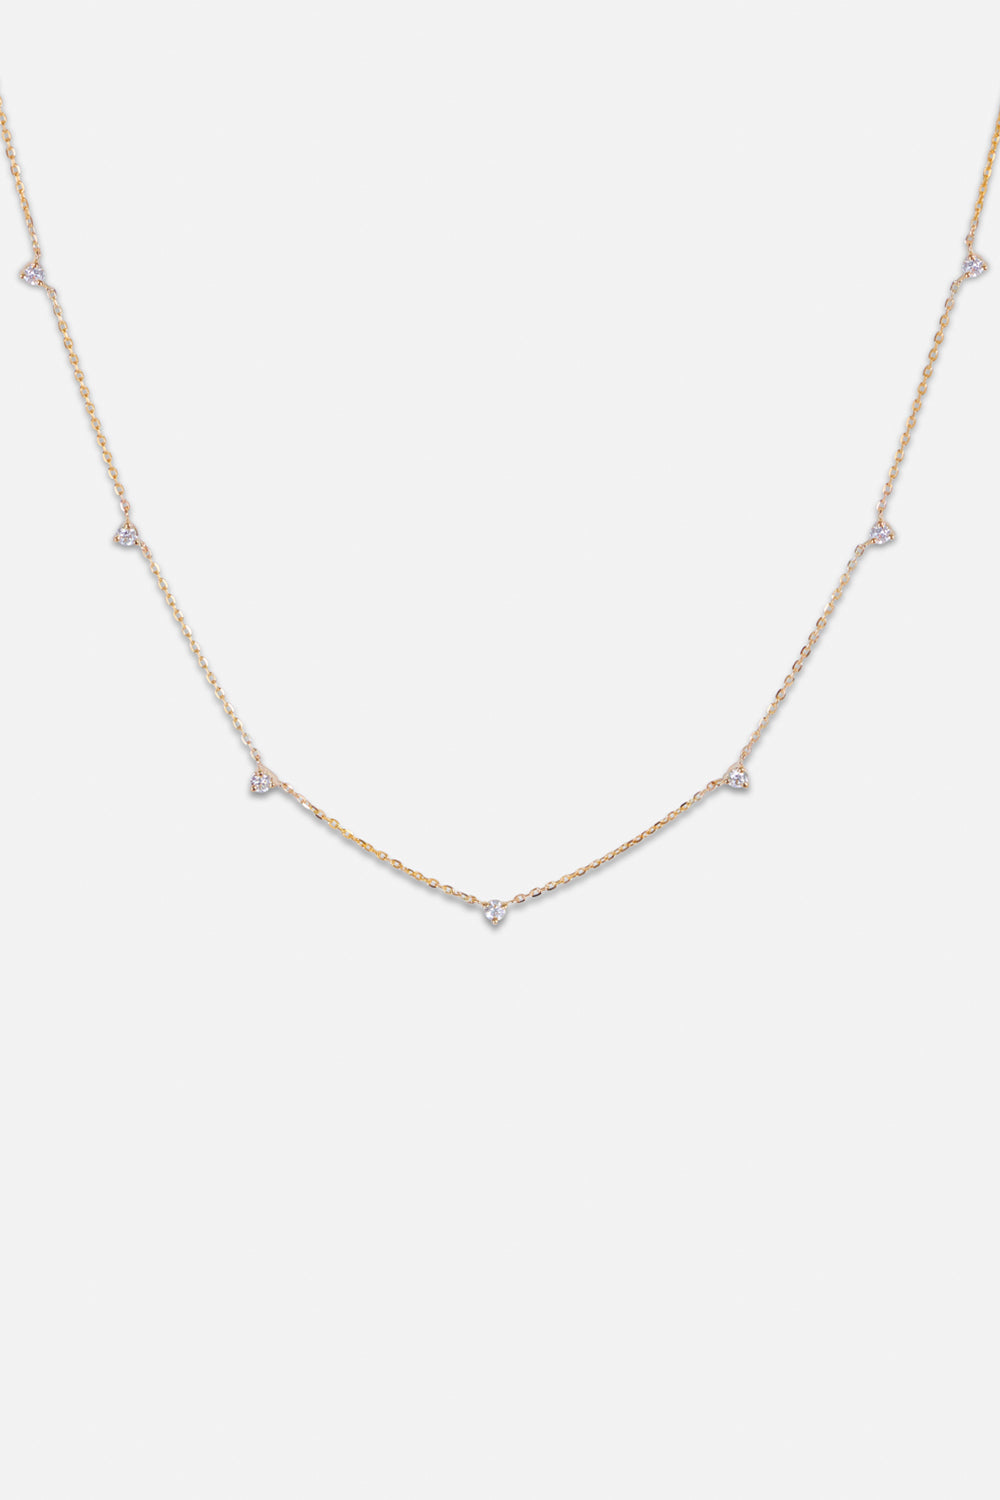 7 Round Diamond Necklace | Yellow Gold